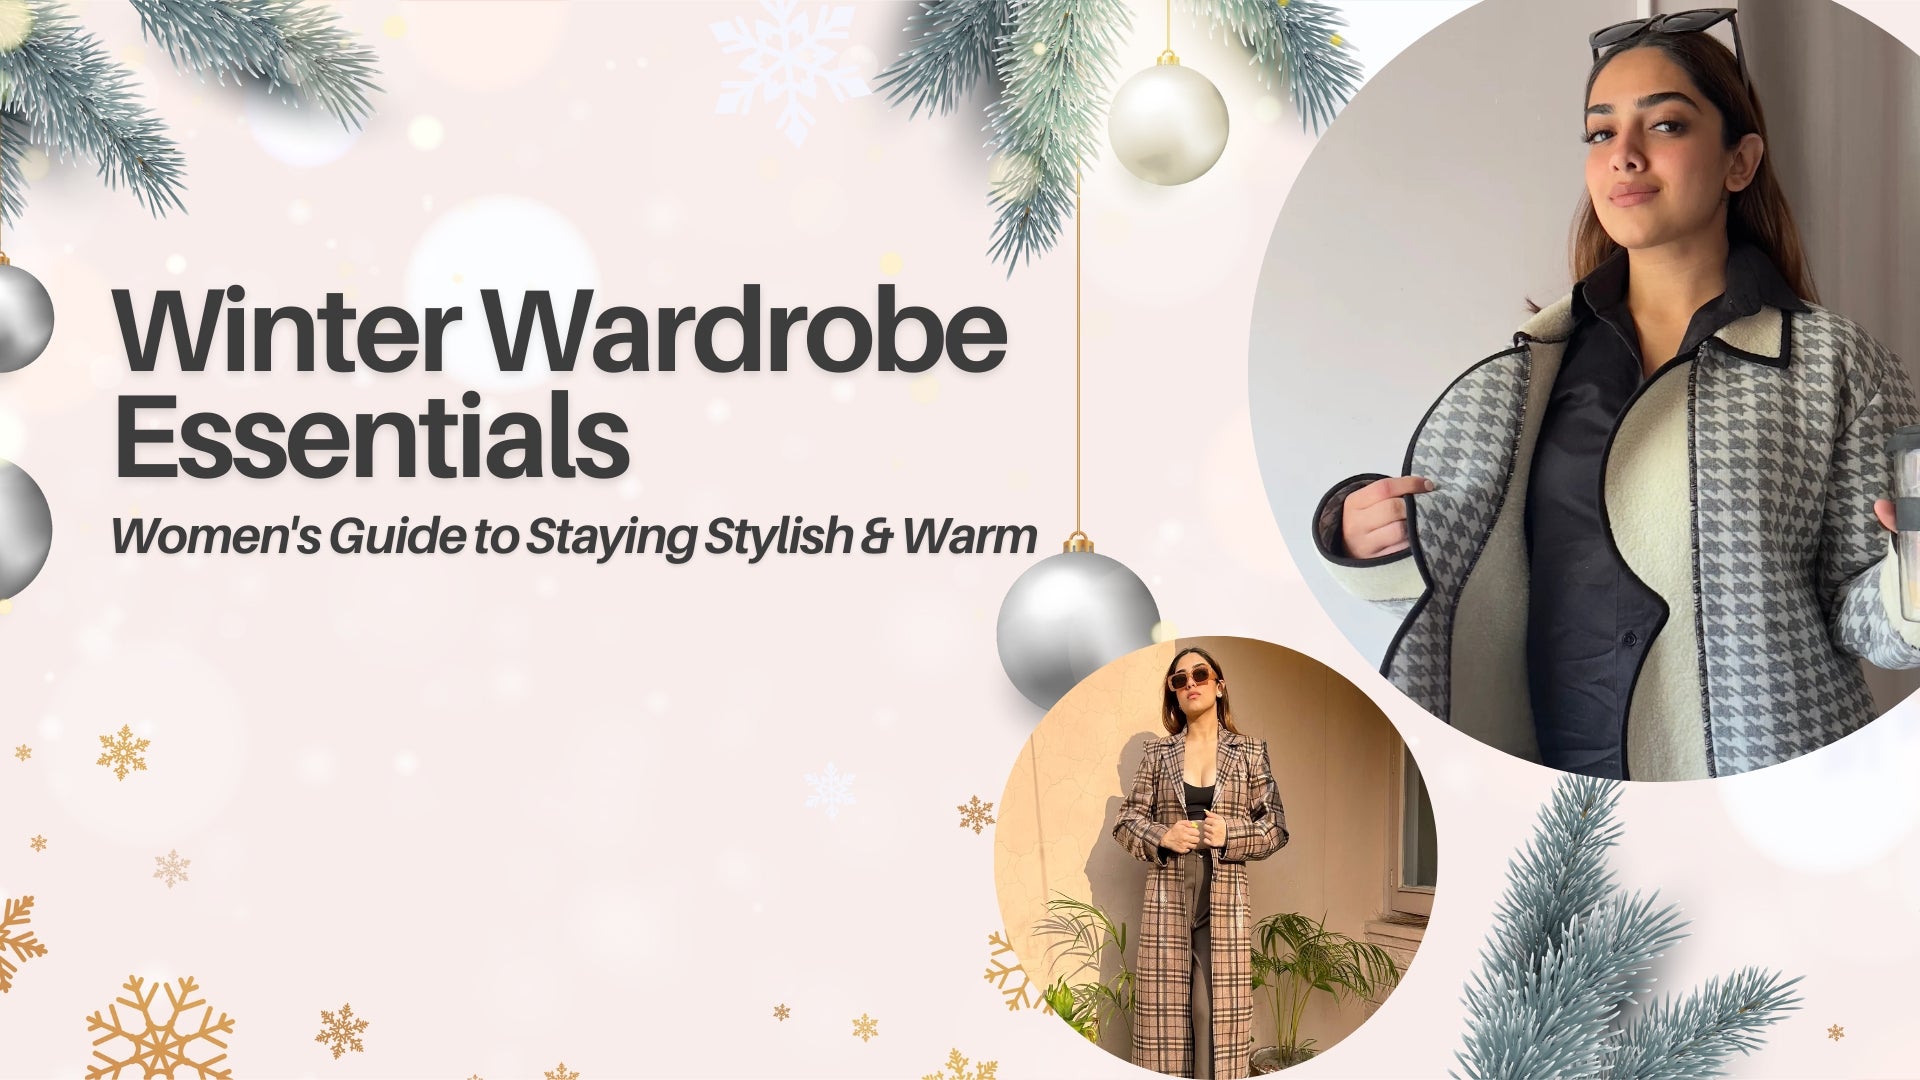 Winter Wardrobe Essentials - Stay Stylish & Warm This Season